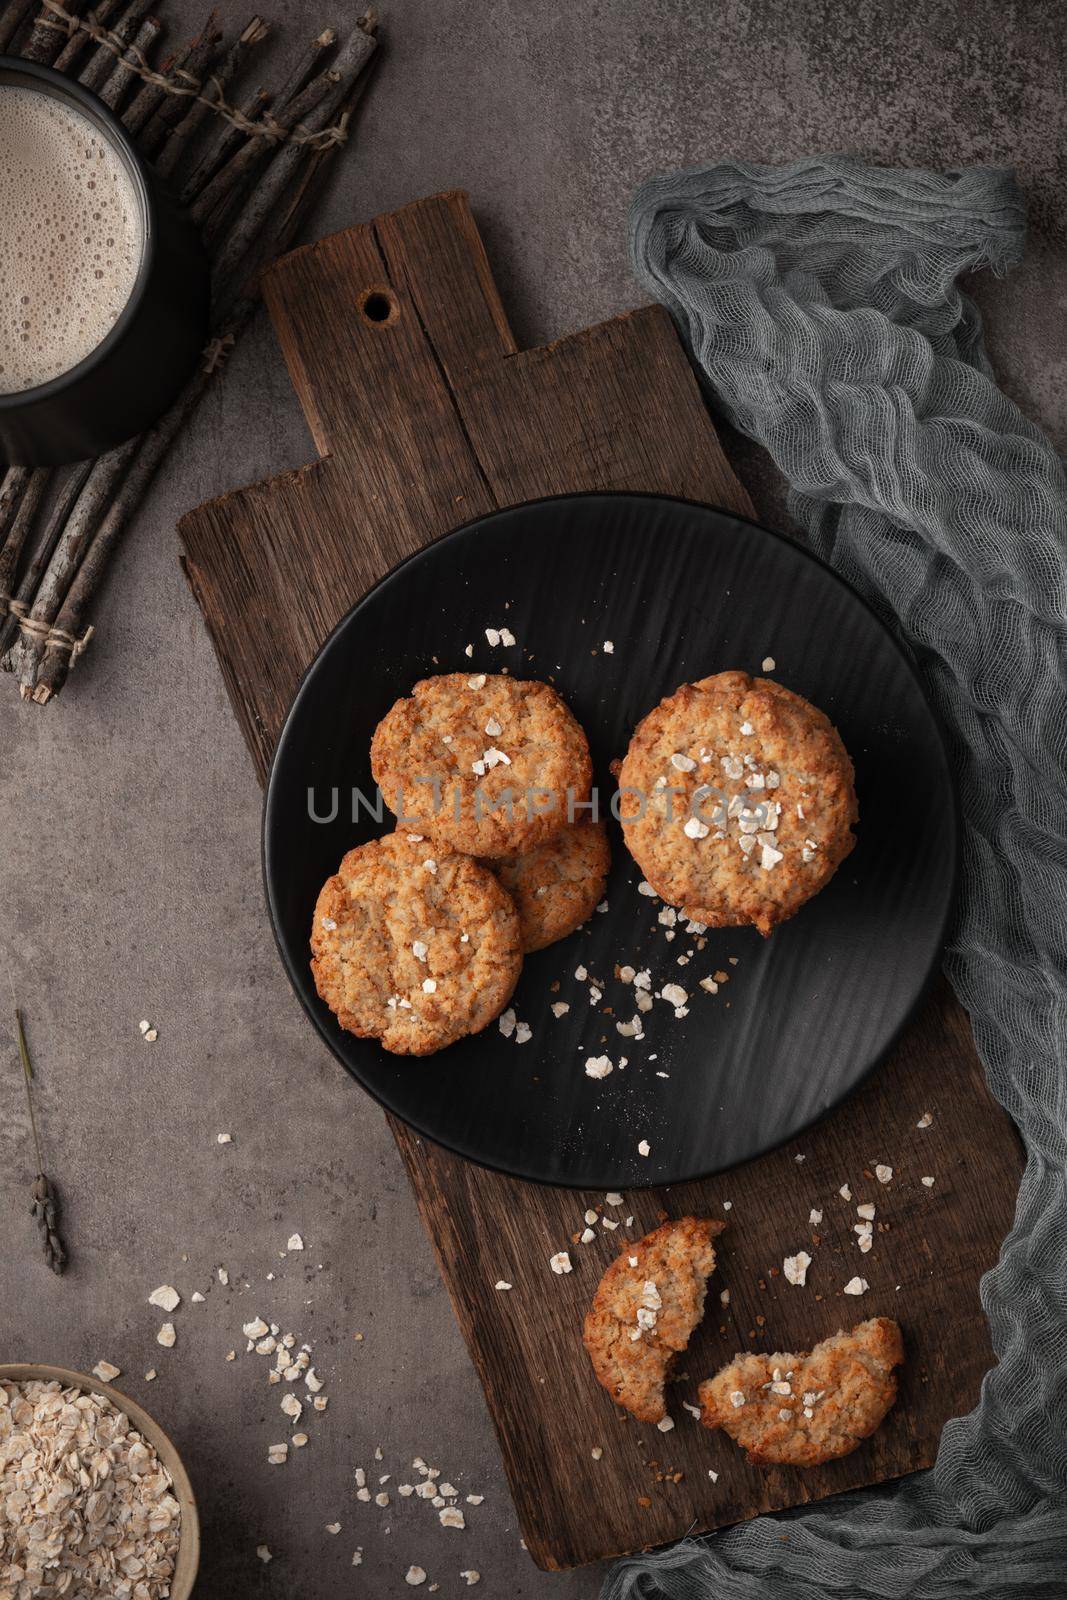 Homemade oatmeal raisin cookies by homydesign